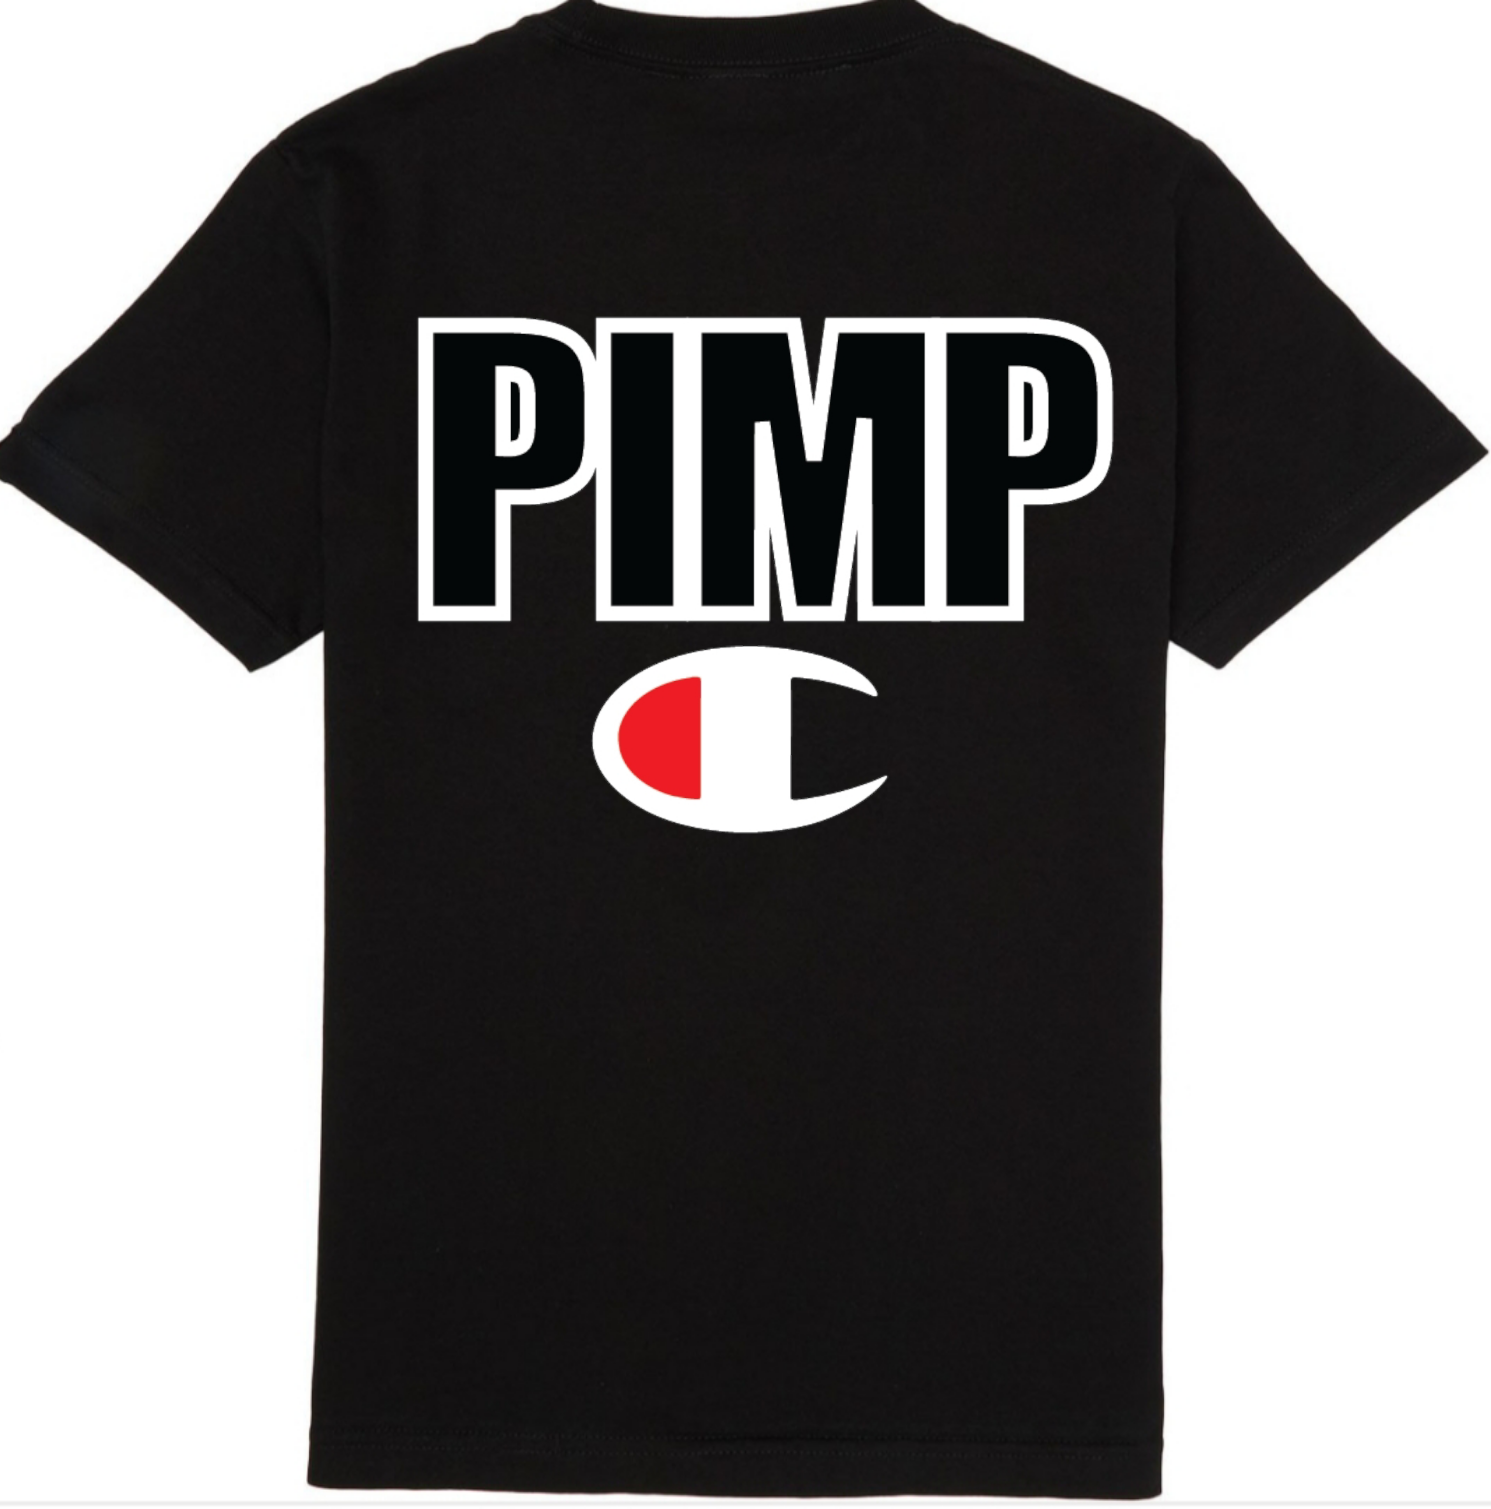 Verwonderlijk Black Pimp C The Champ T-Shirt WA-89